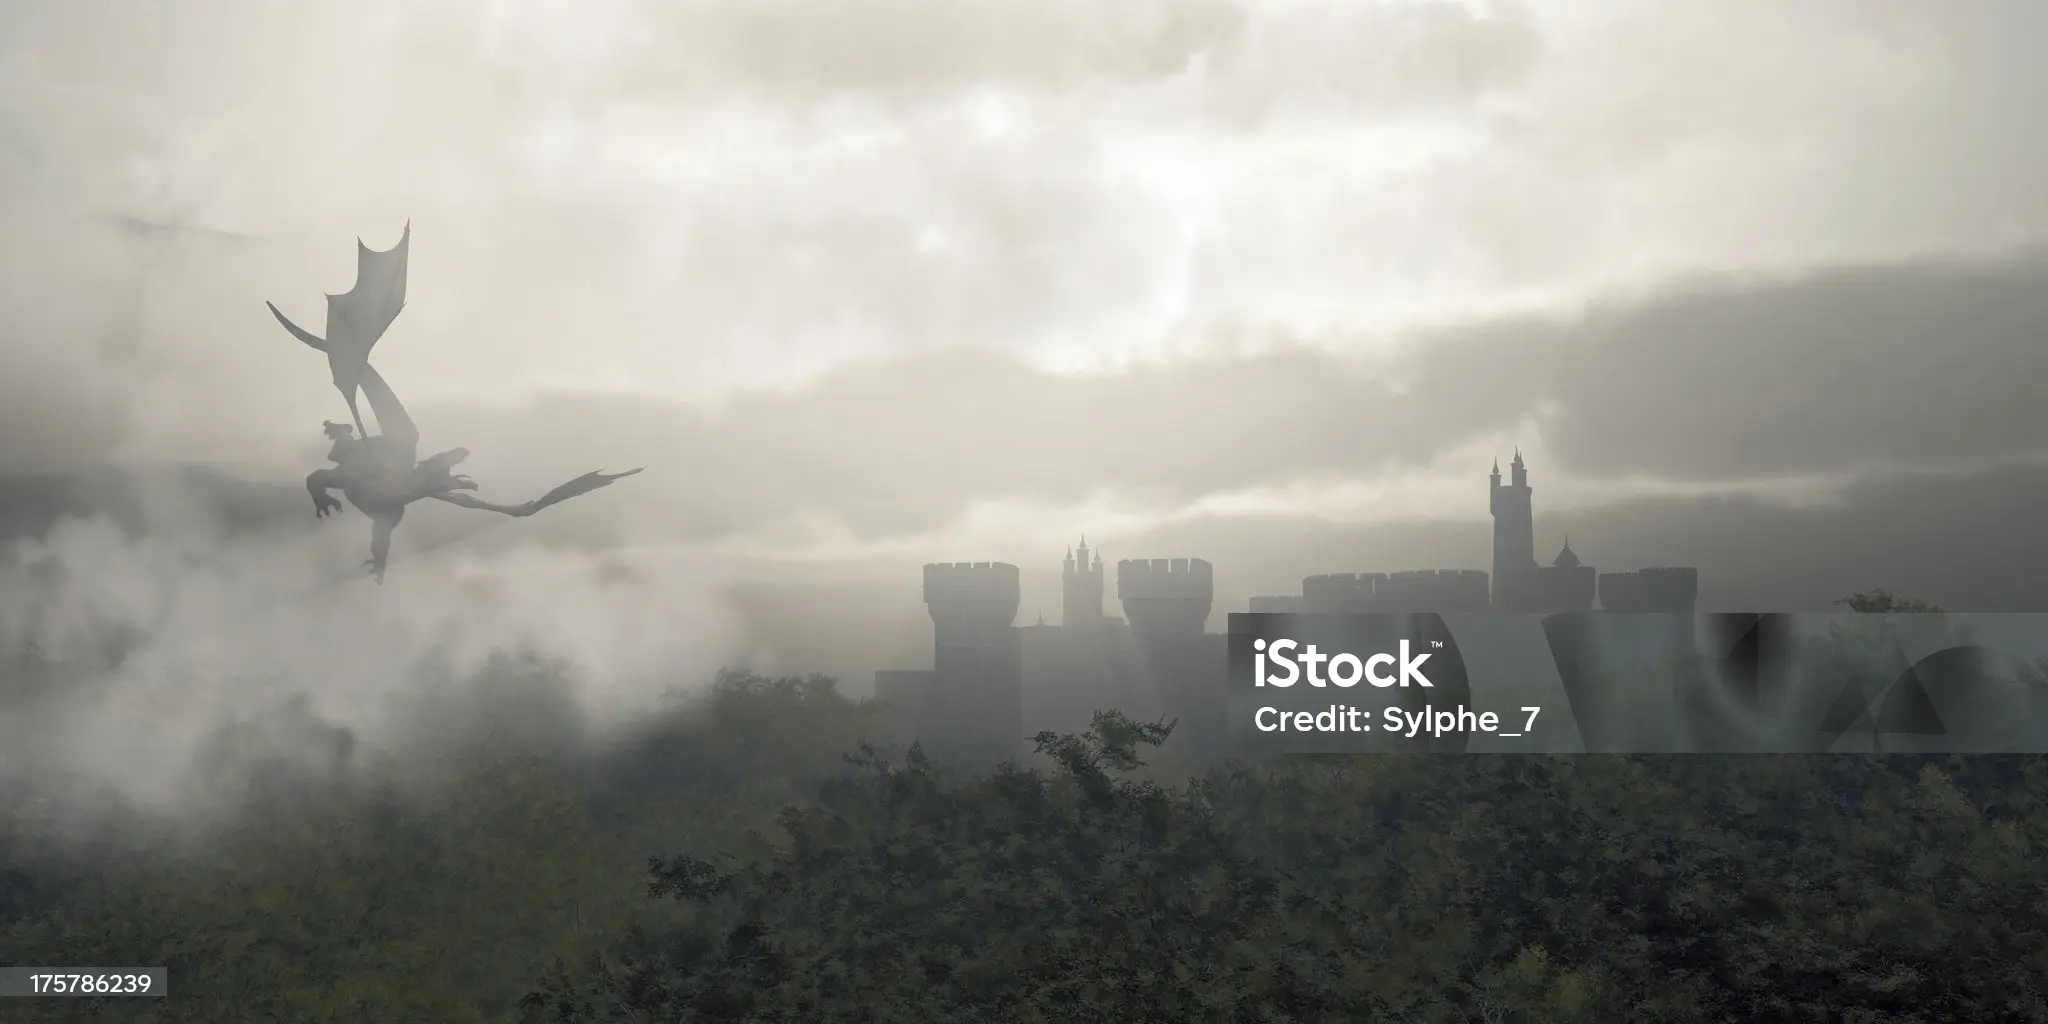 Dragon flying over a castle in a misty fantasy forest, 3d digitally rendered illustration by Algol Designs